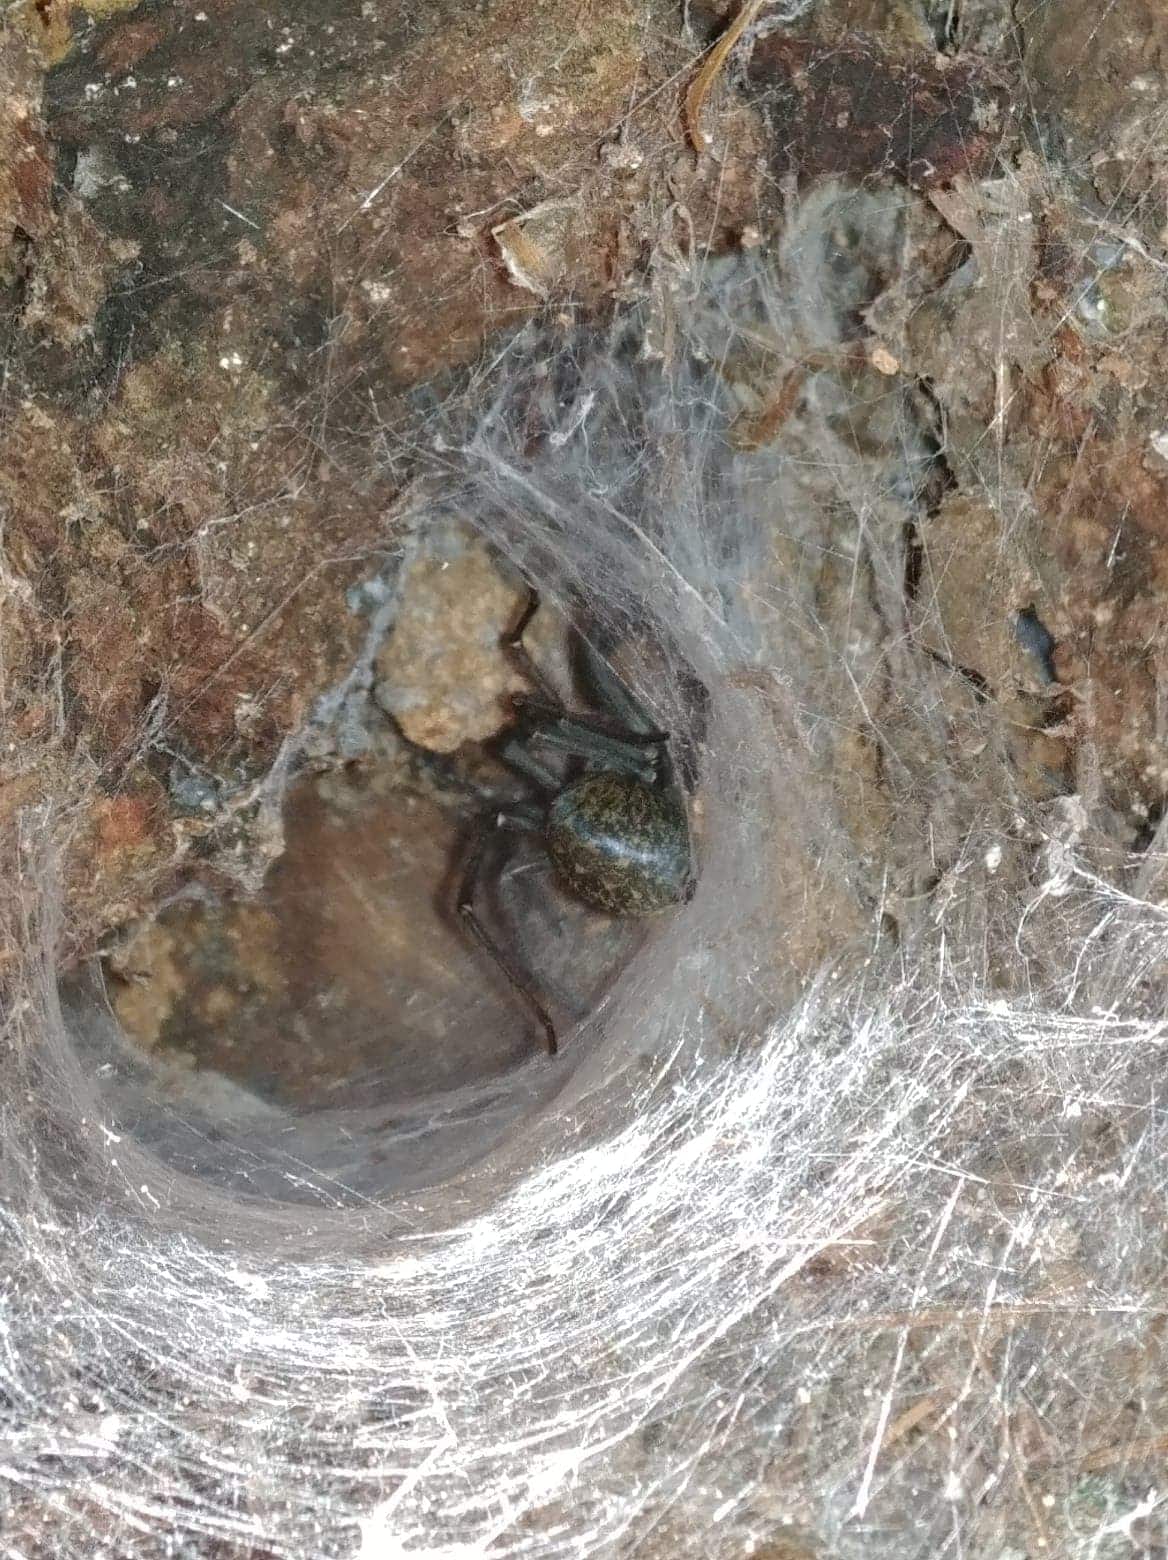 Picture of Eratigena duellica (Giant House Spider) - Dorsal,Webs